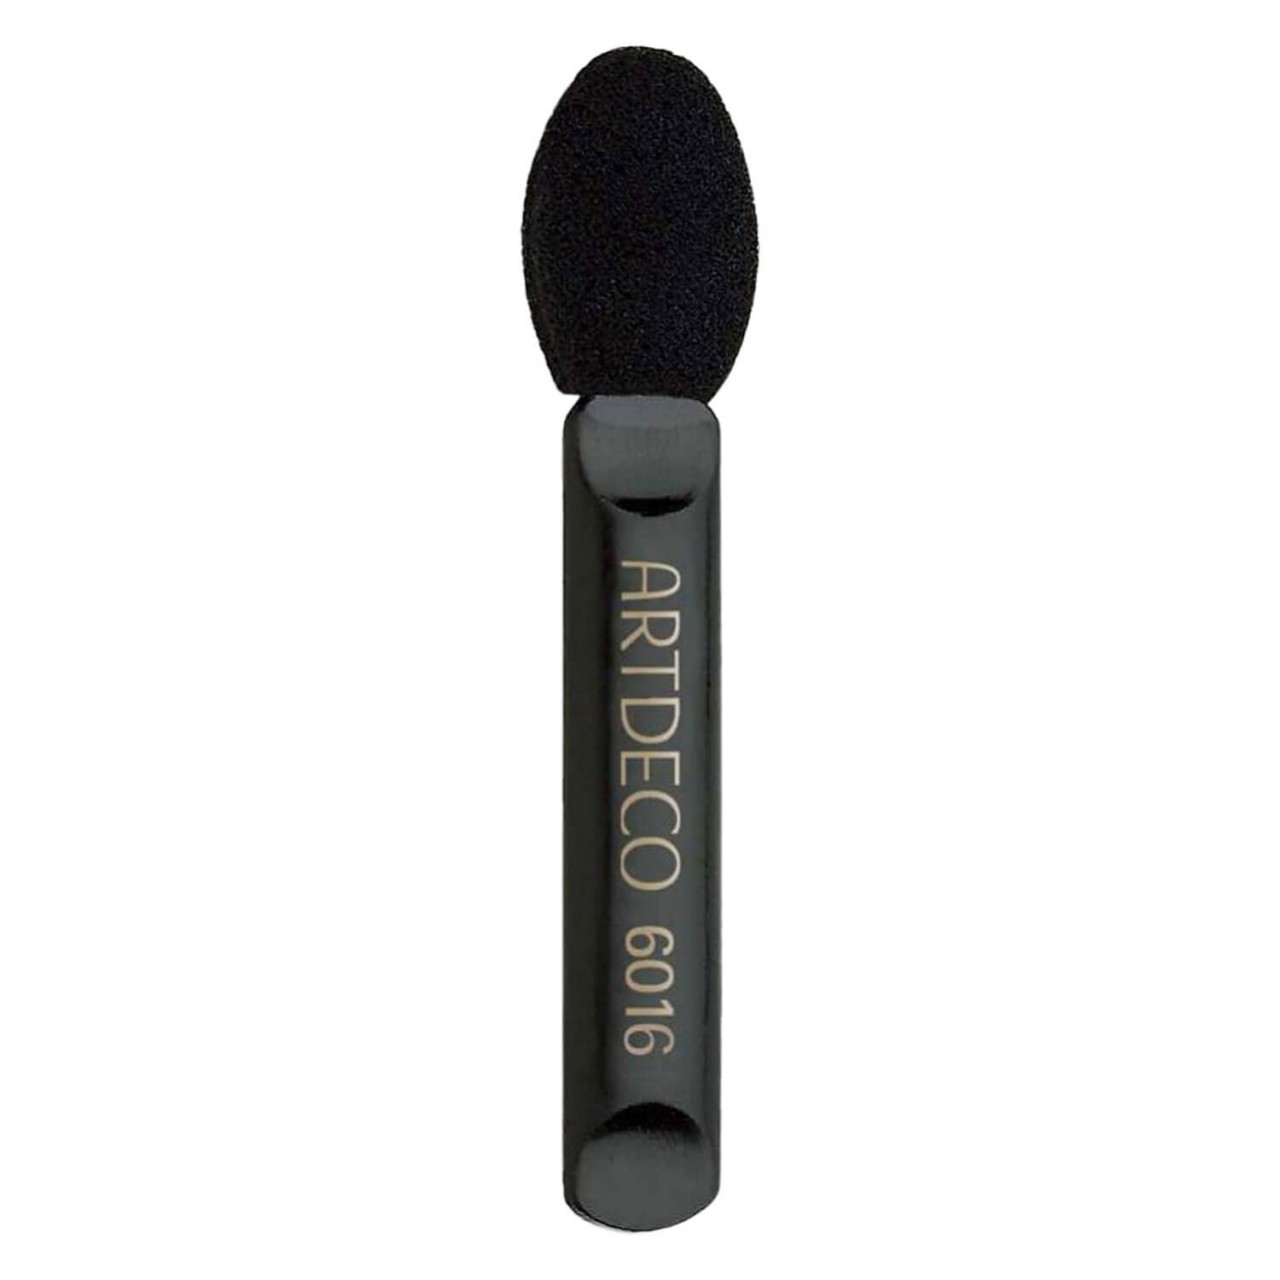 Artdeco Tools - Eyeshadow Applicator for Beauty Box von Artdeco